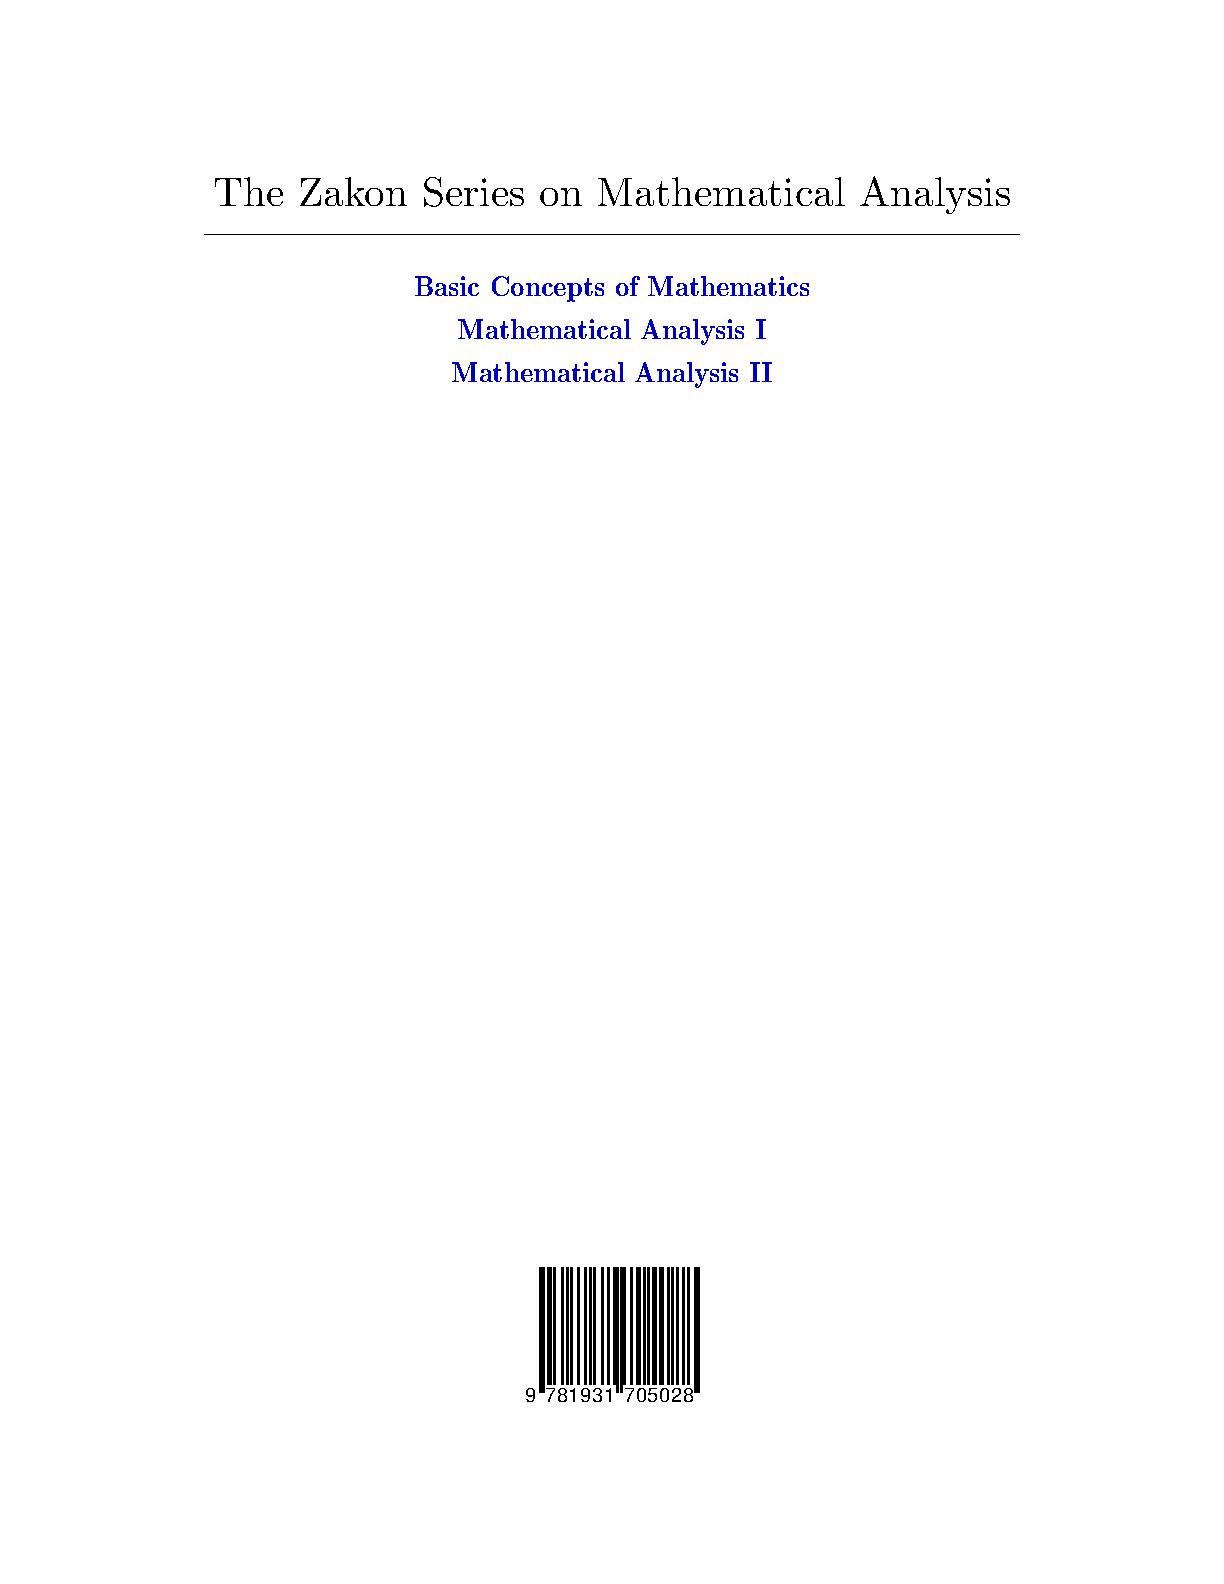 mathematical analysis essay topics